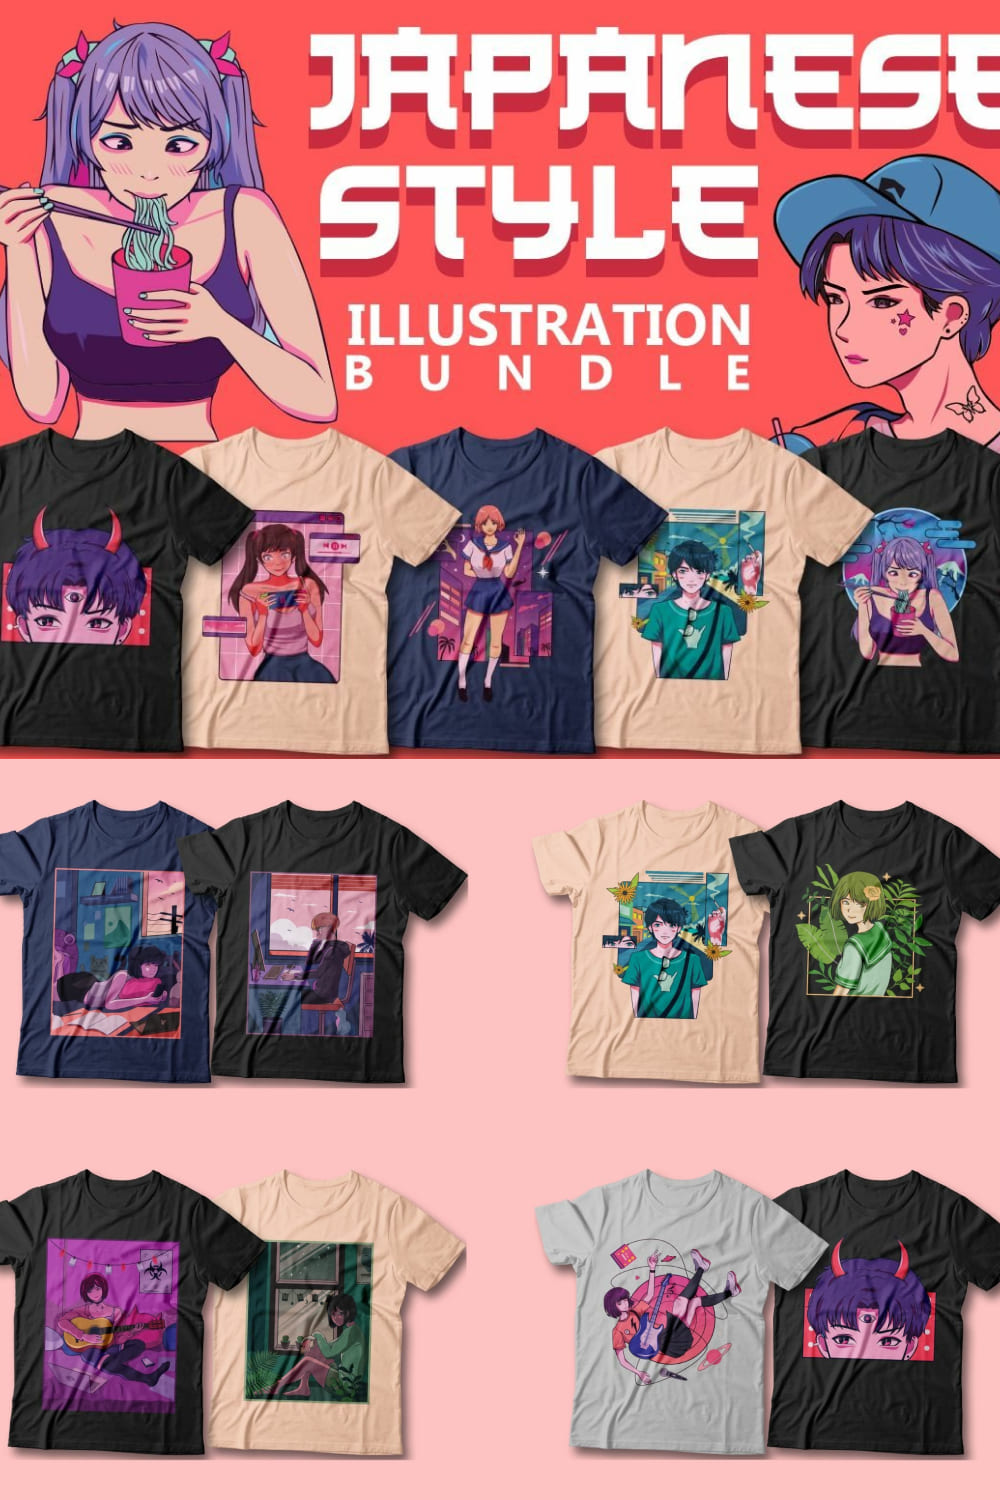 Japanese Style Anime Illustration T-shirt Designs Bundle - Pinterest.